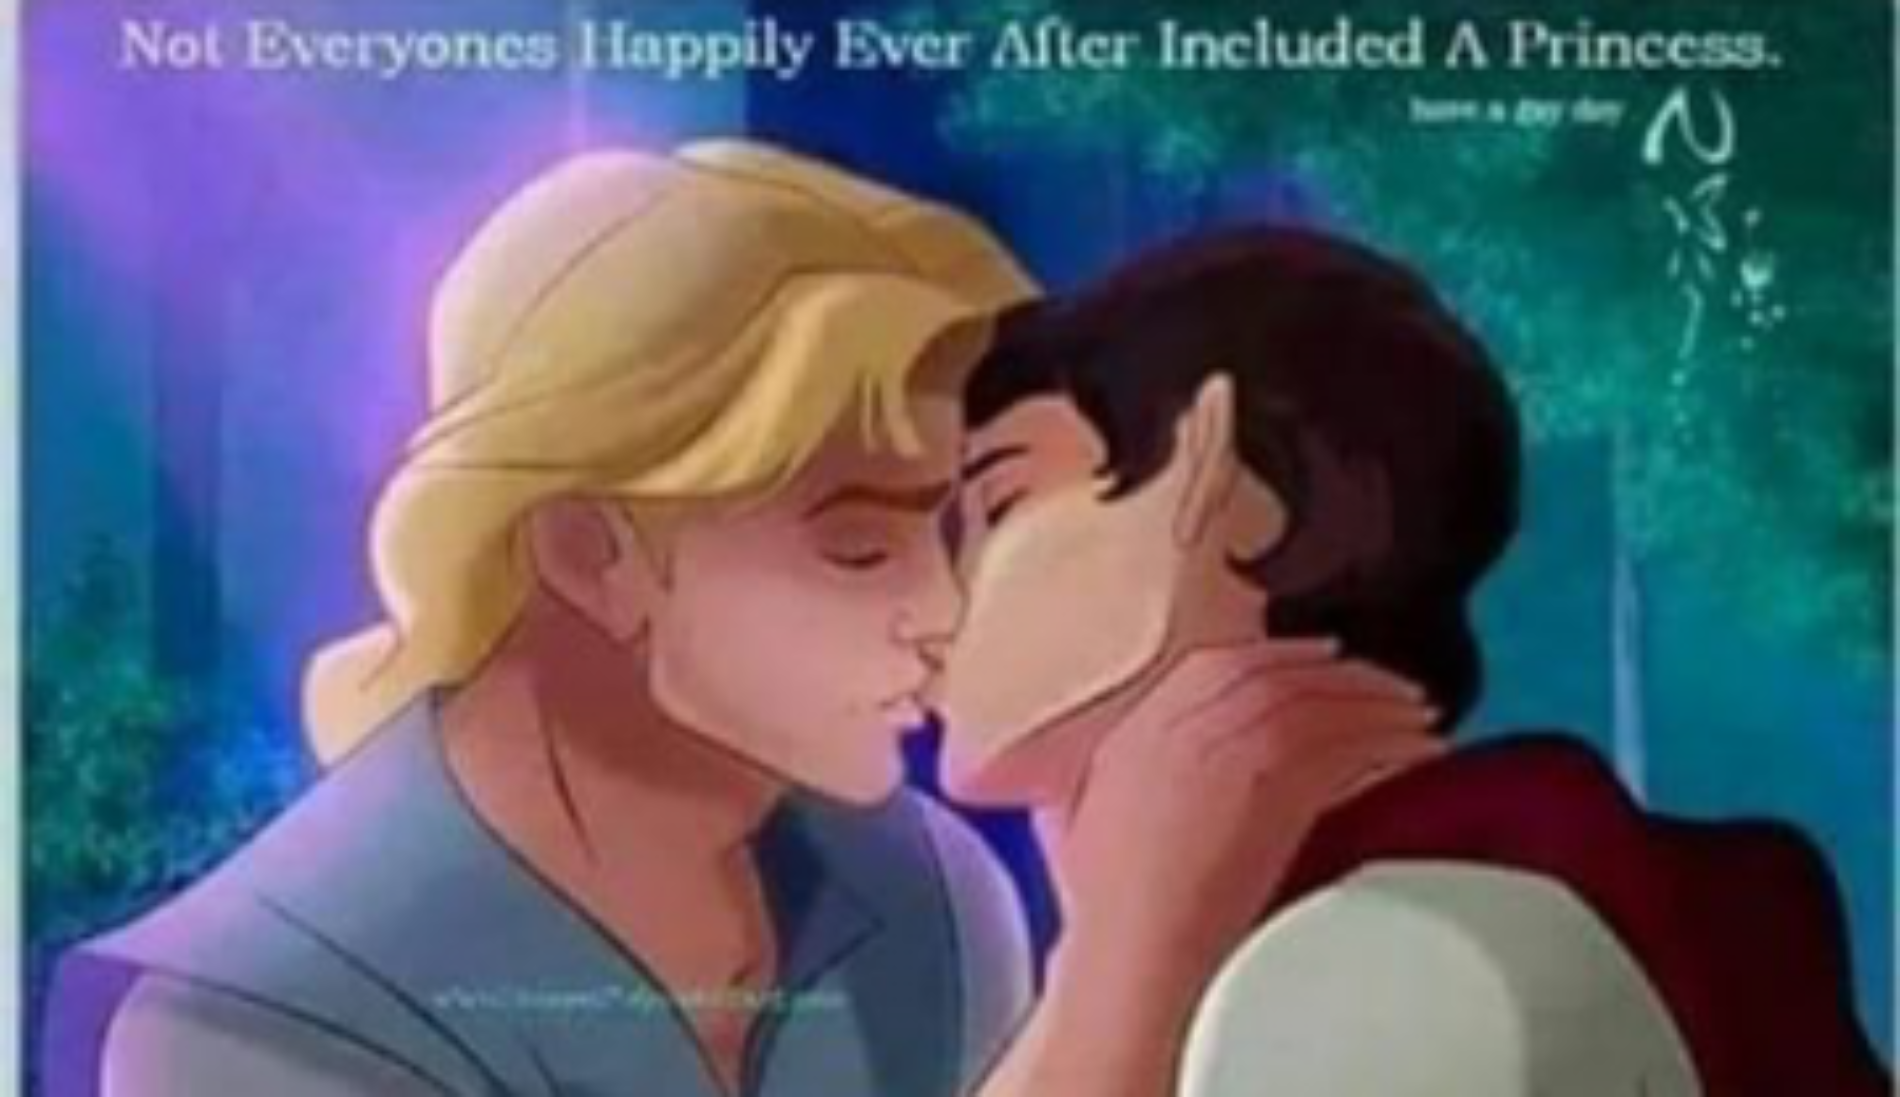 Photo: A Disney Story Without A Princess?